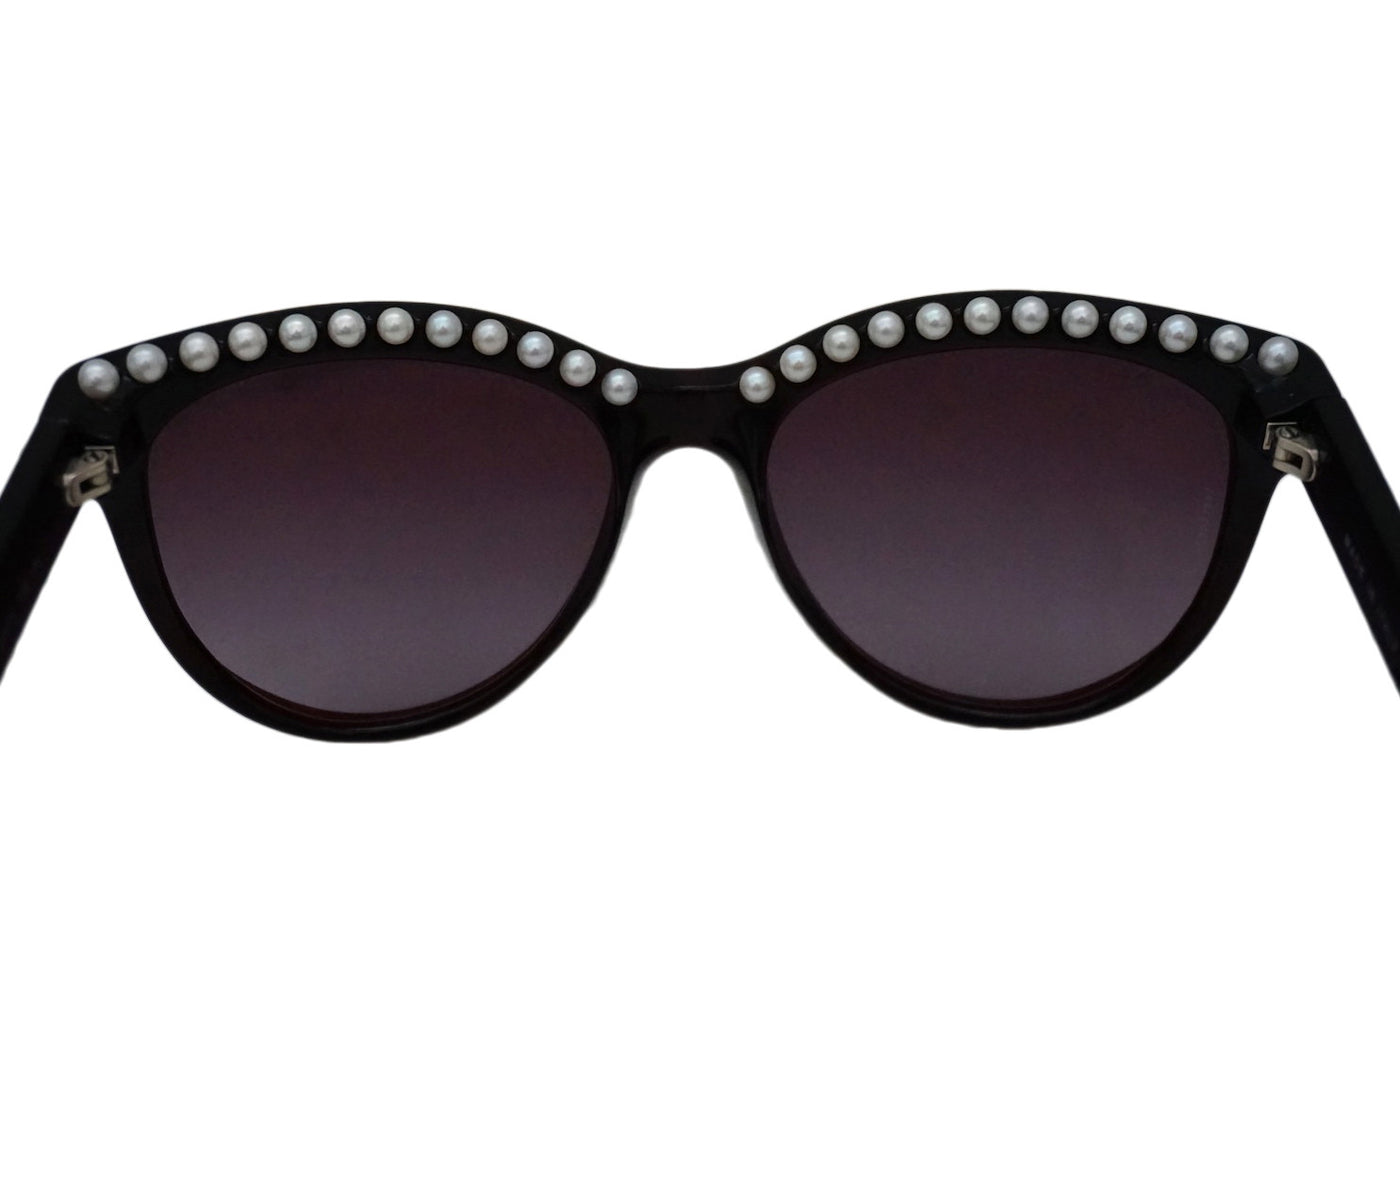 Authentic Chanel Pearl Cat Eye Runway Sunglasses